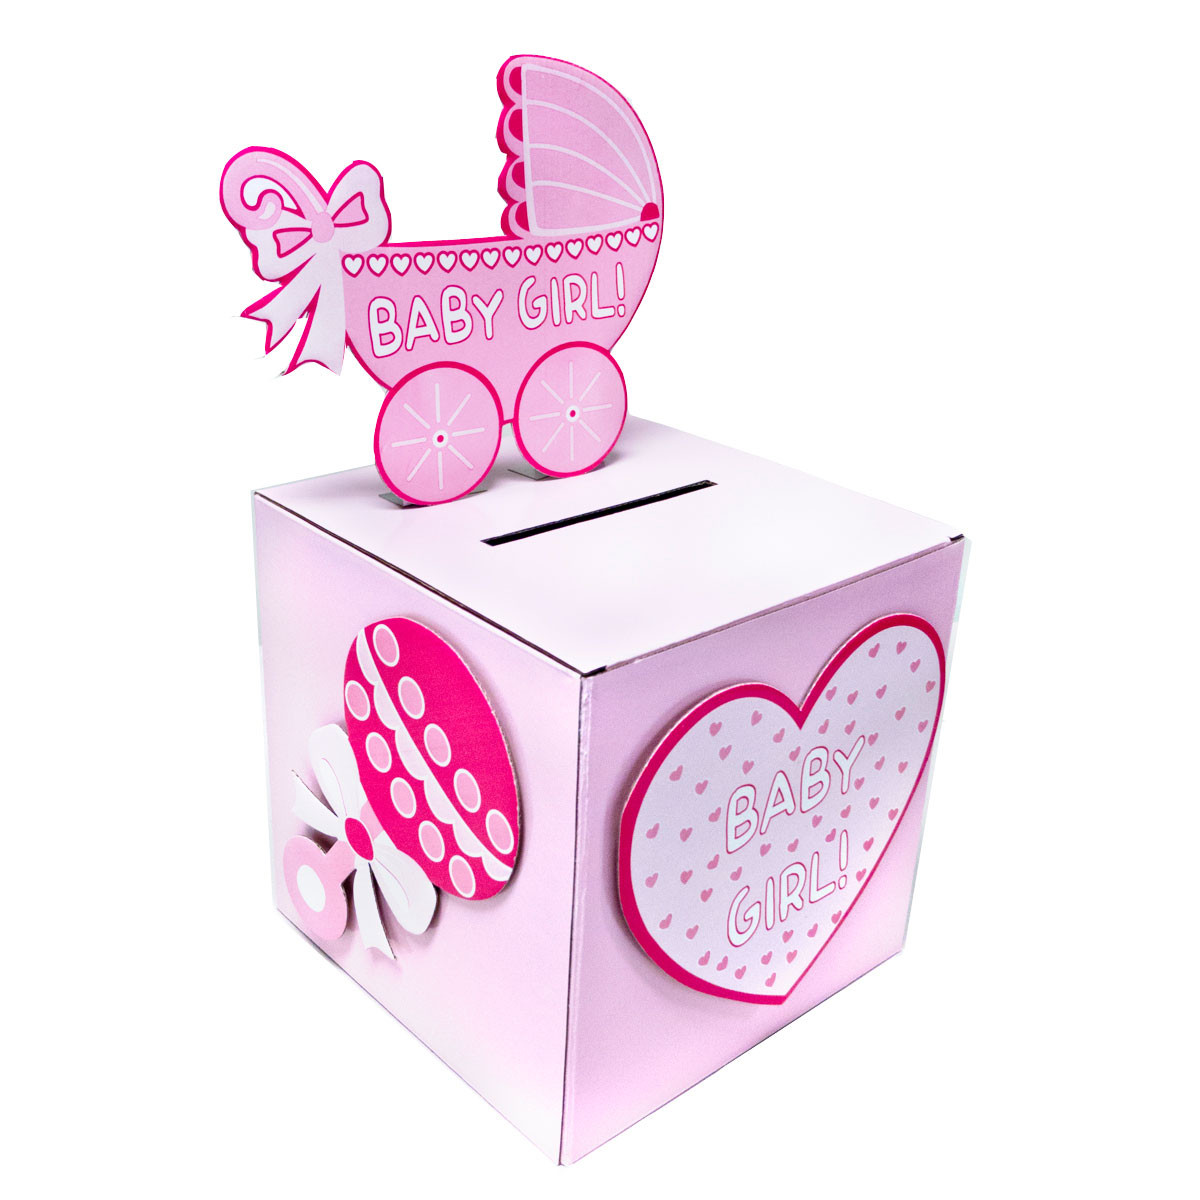 Baby Shower Gift Box Ideas
 BabyShower Wishing well card t or money box BOY GIRL